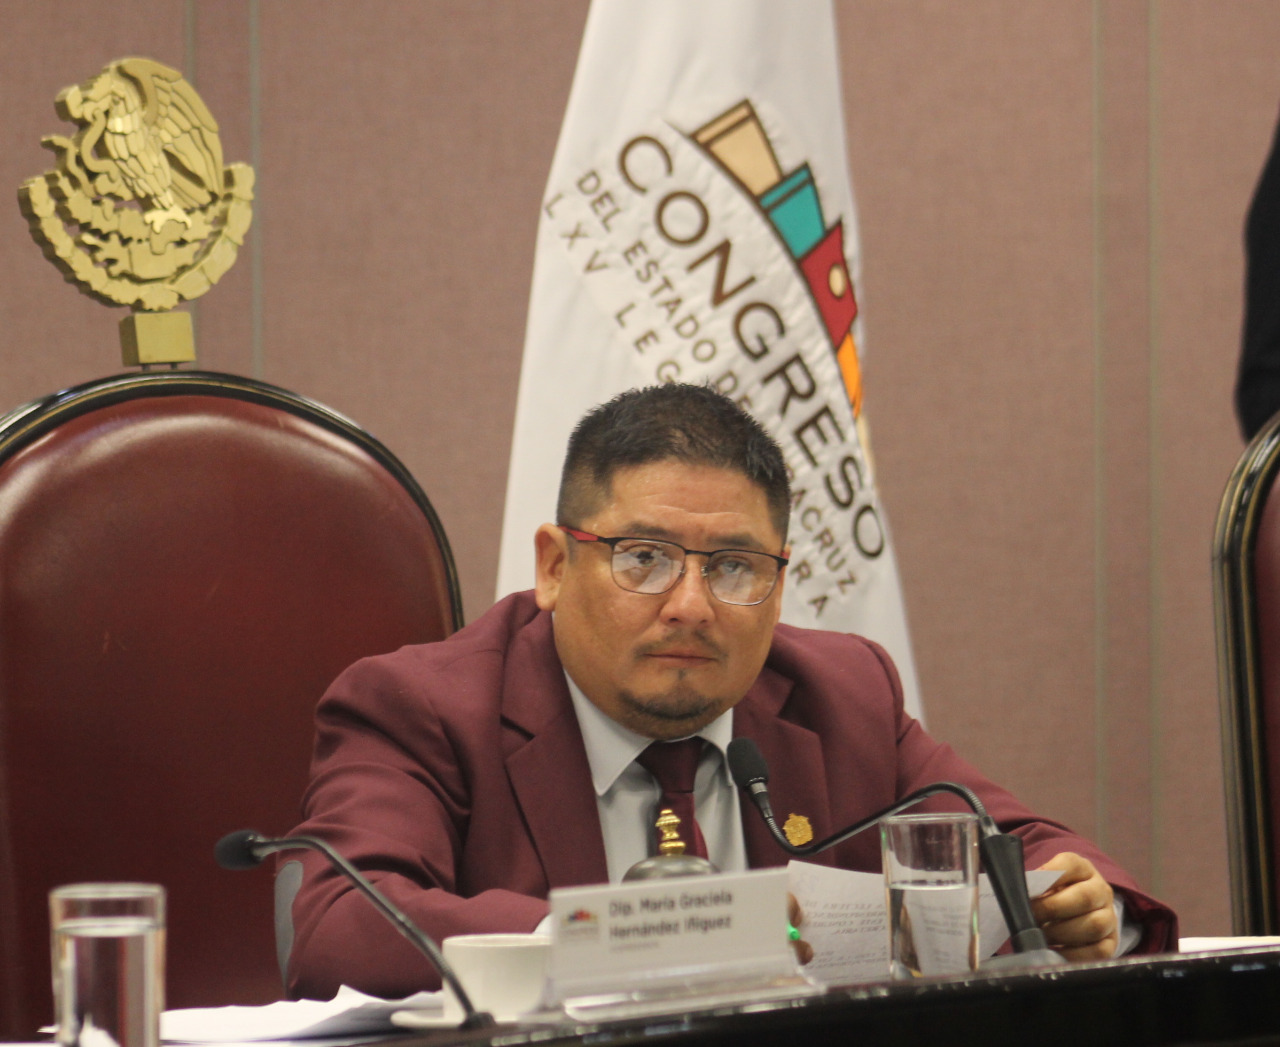 Congreso del Estado esperará resolución final de SCJN sobre caso del municipio de Actopan